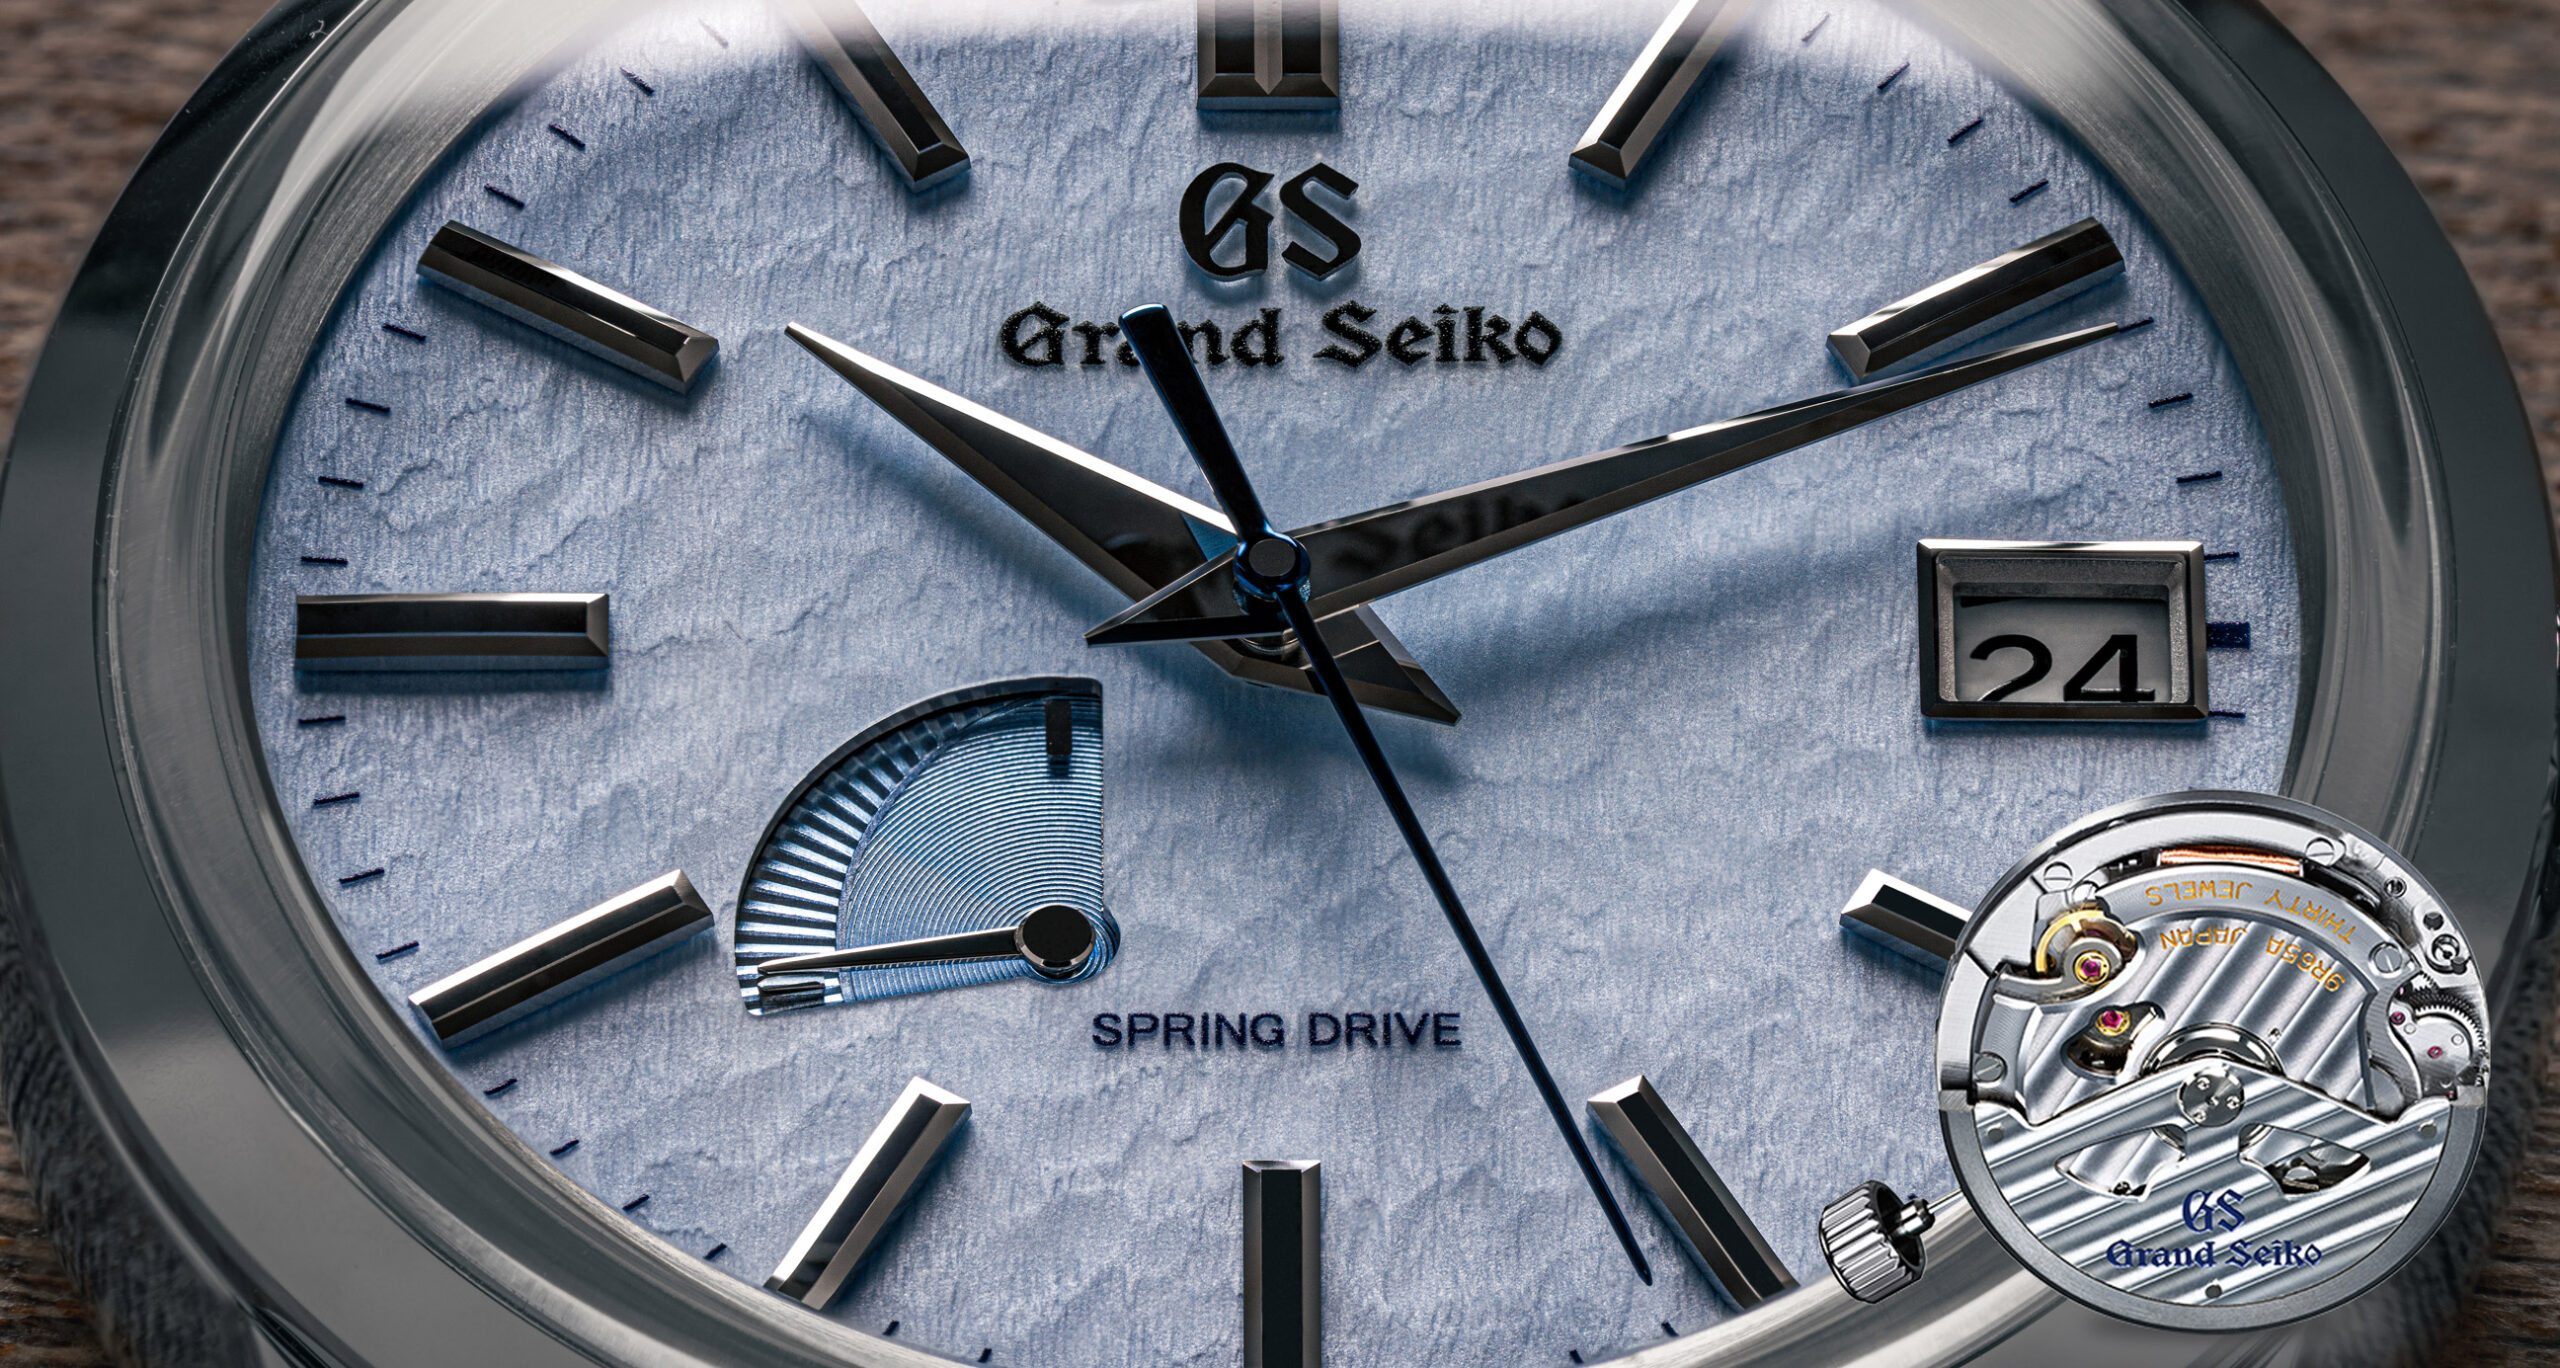 Grand Seiko Skyflake SBGA407 with the Spring Drive calibre 9r65